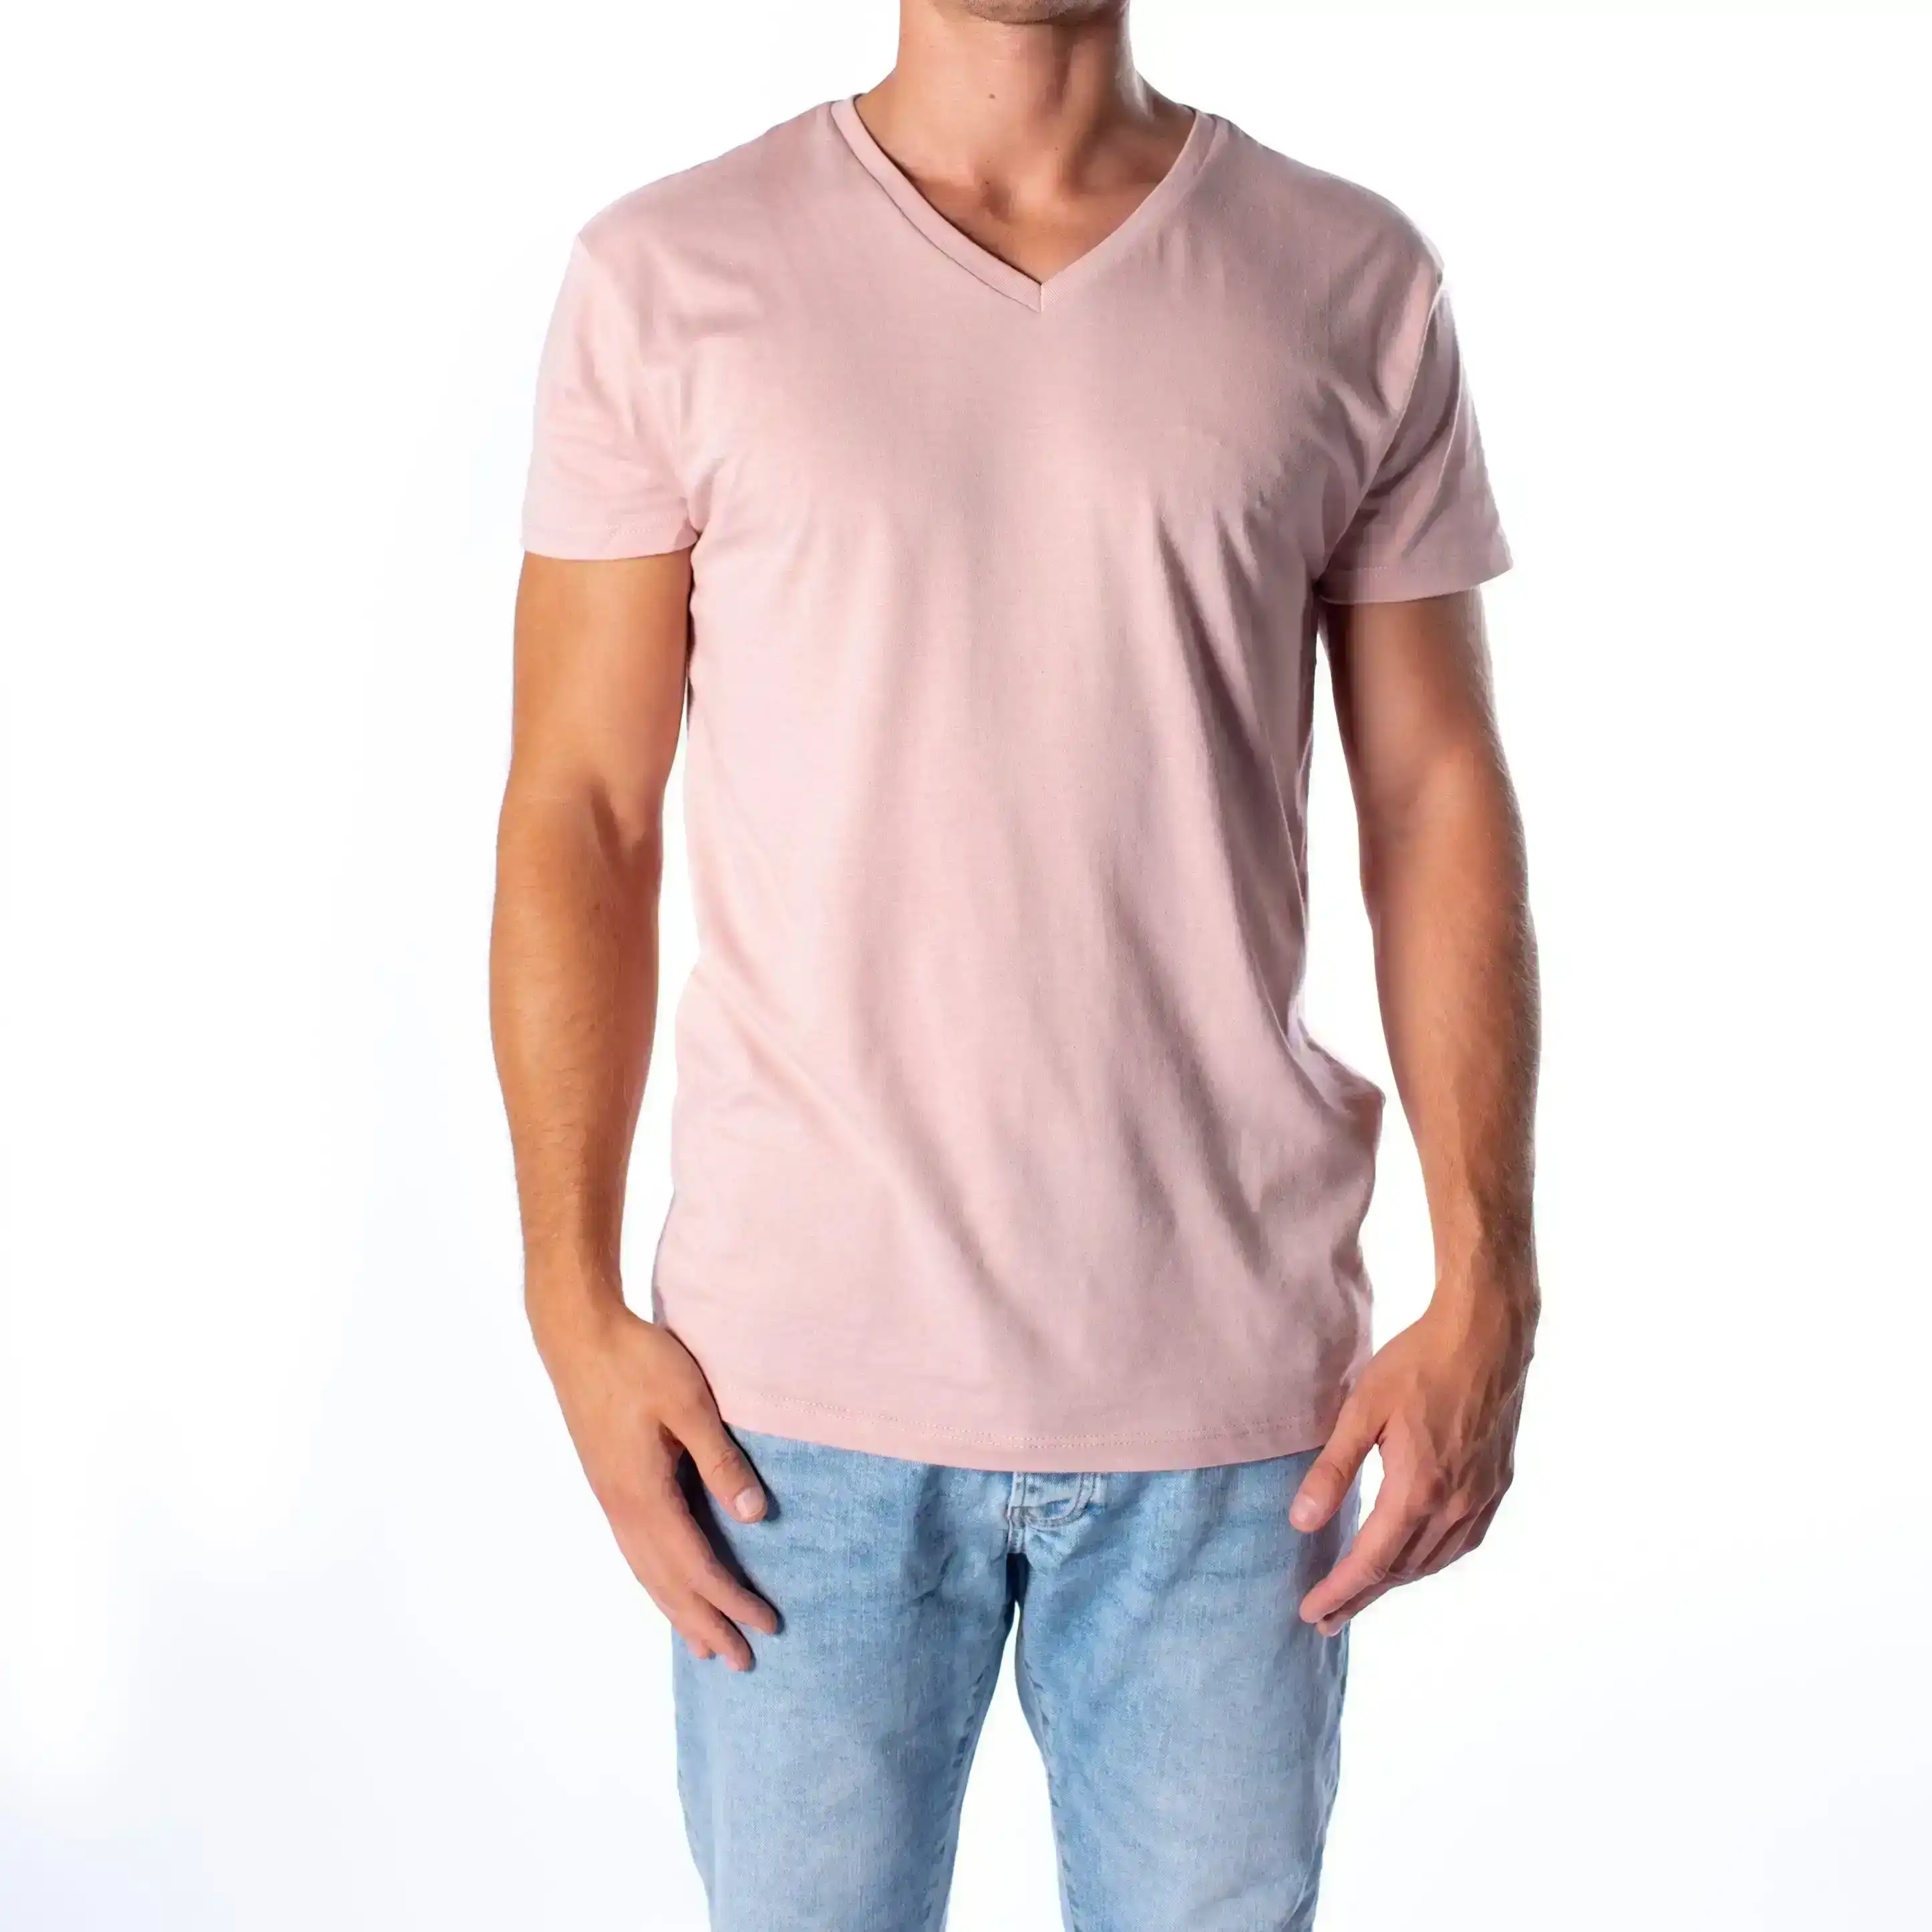 Topman Men's Regular Fit Dusty Pink T-Shirt